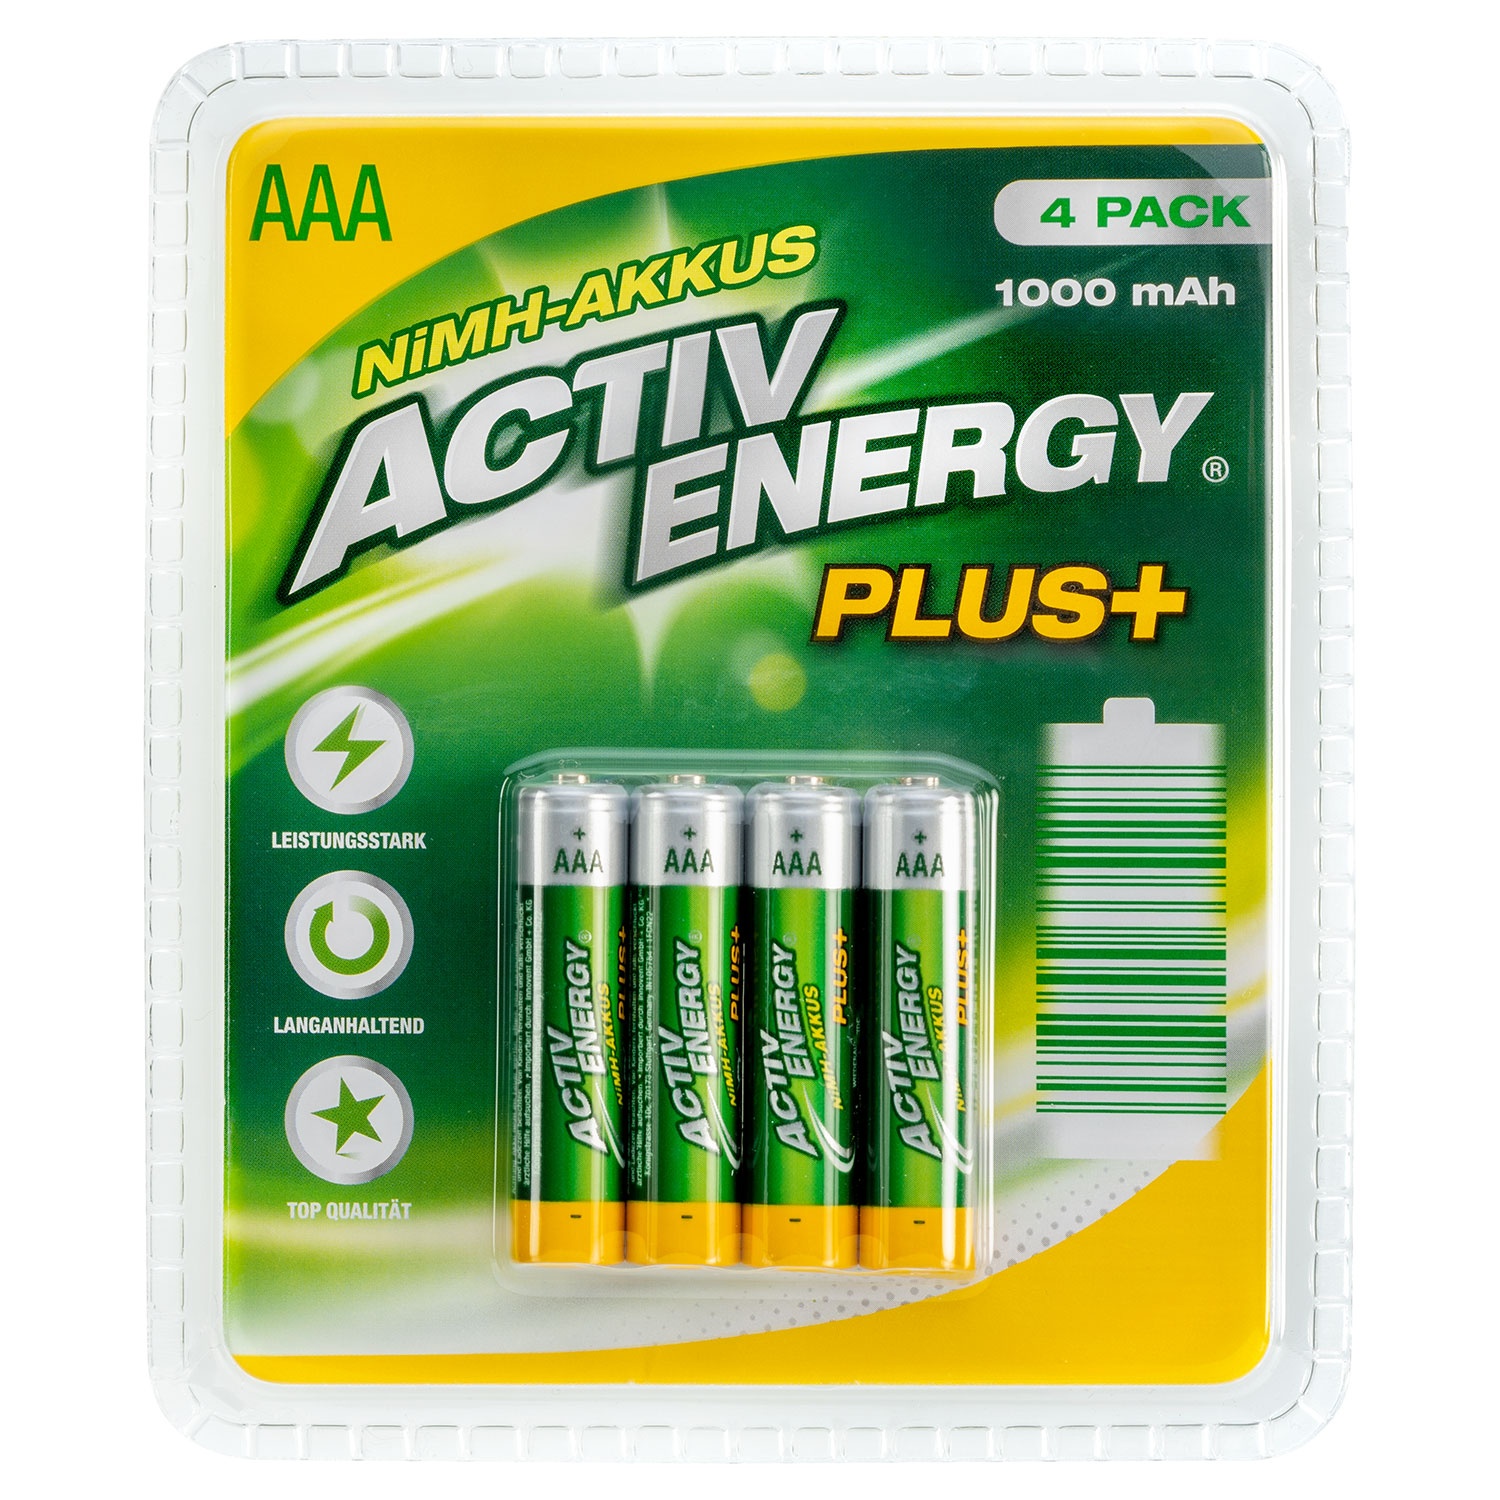 ACTIV ENERGY® NiMH-Hochleistungsakkus